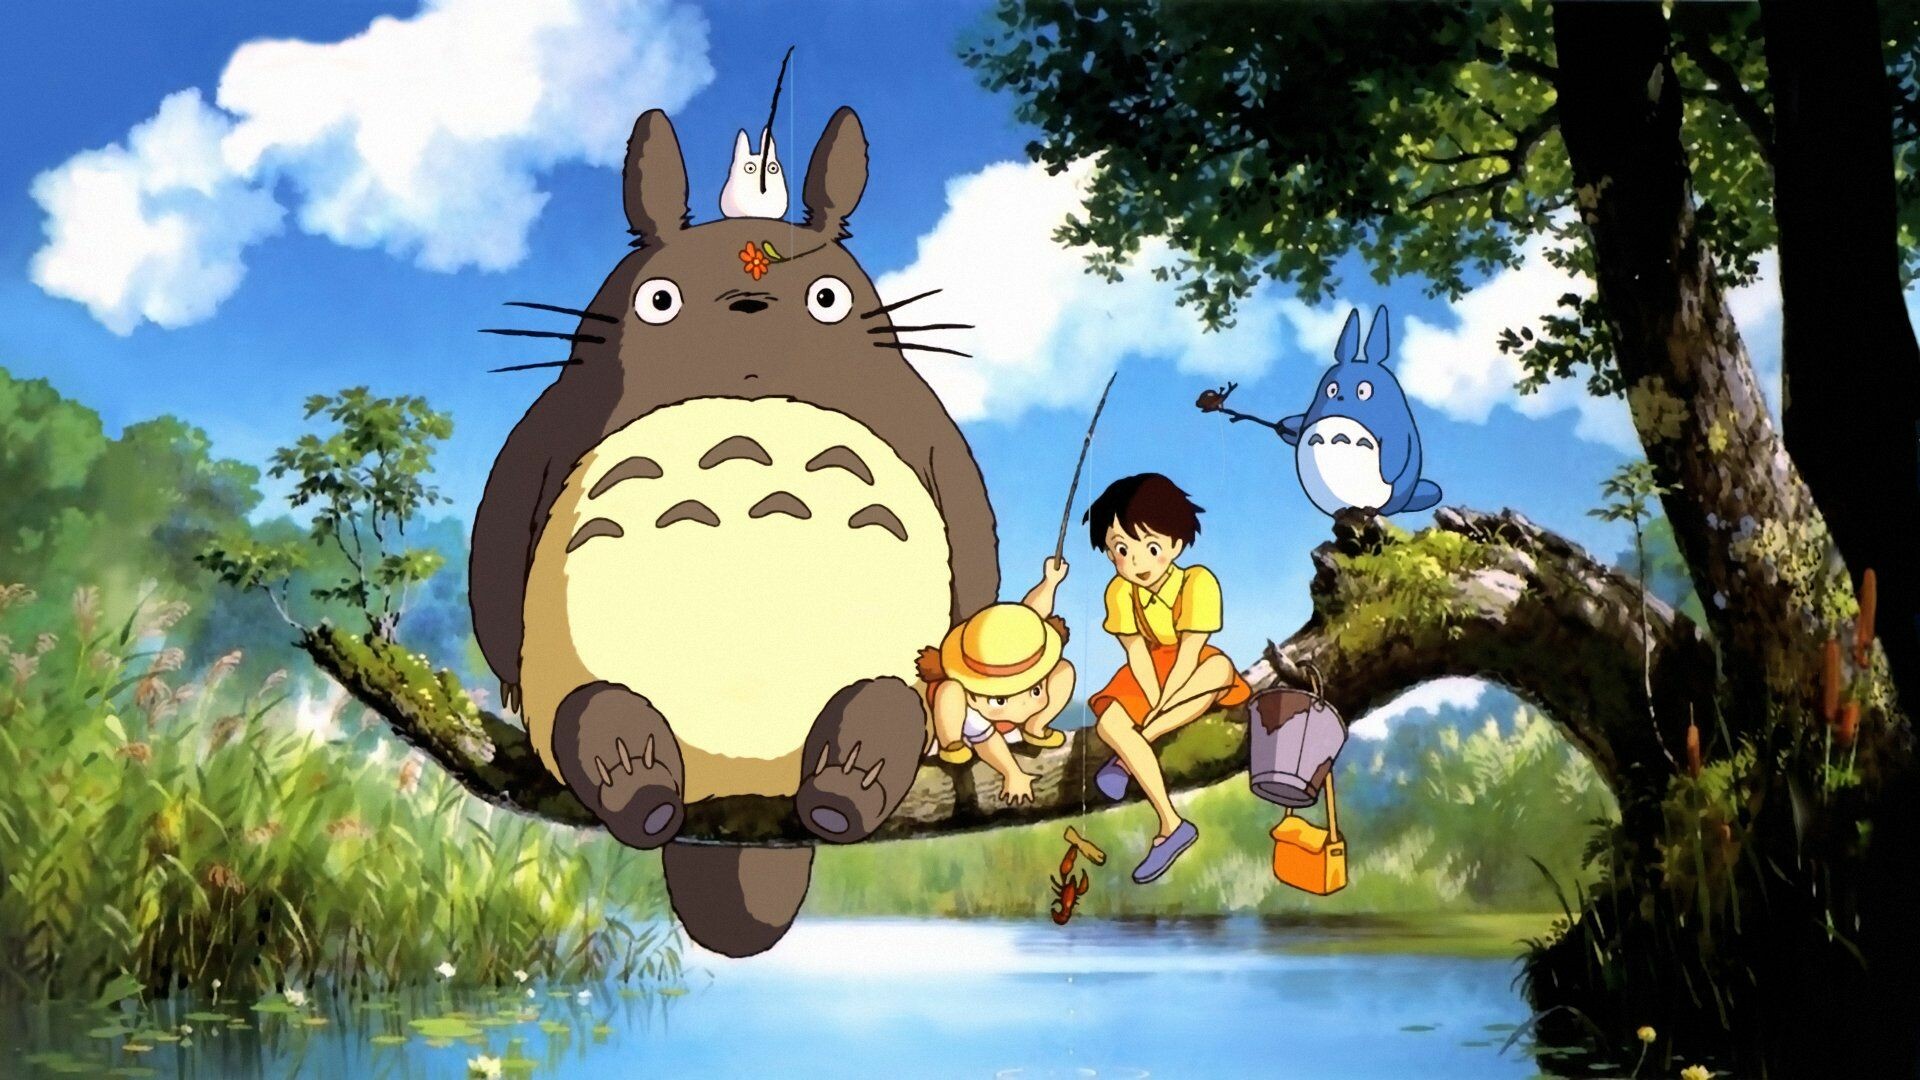 My Neighbor Totoro: An animated film written and directed by Hayao Miyazaki, Mei, Satsuki. 1920x1080 Full HD Wallpaper.